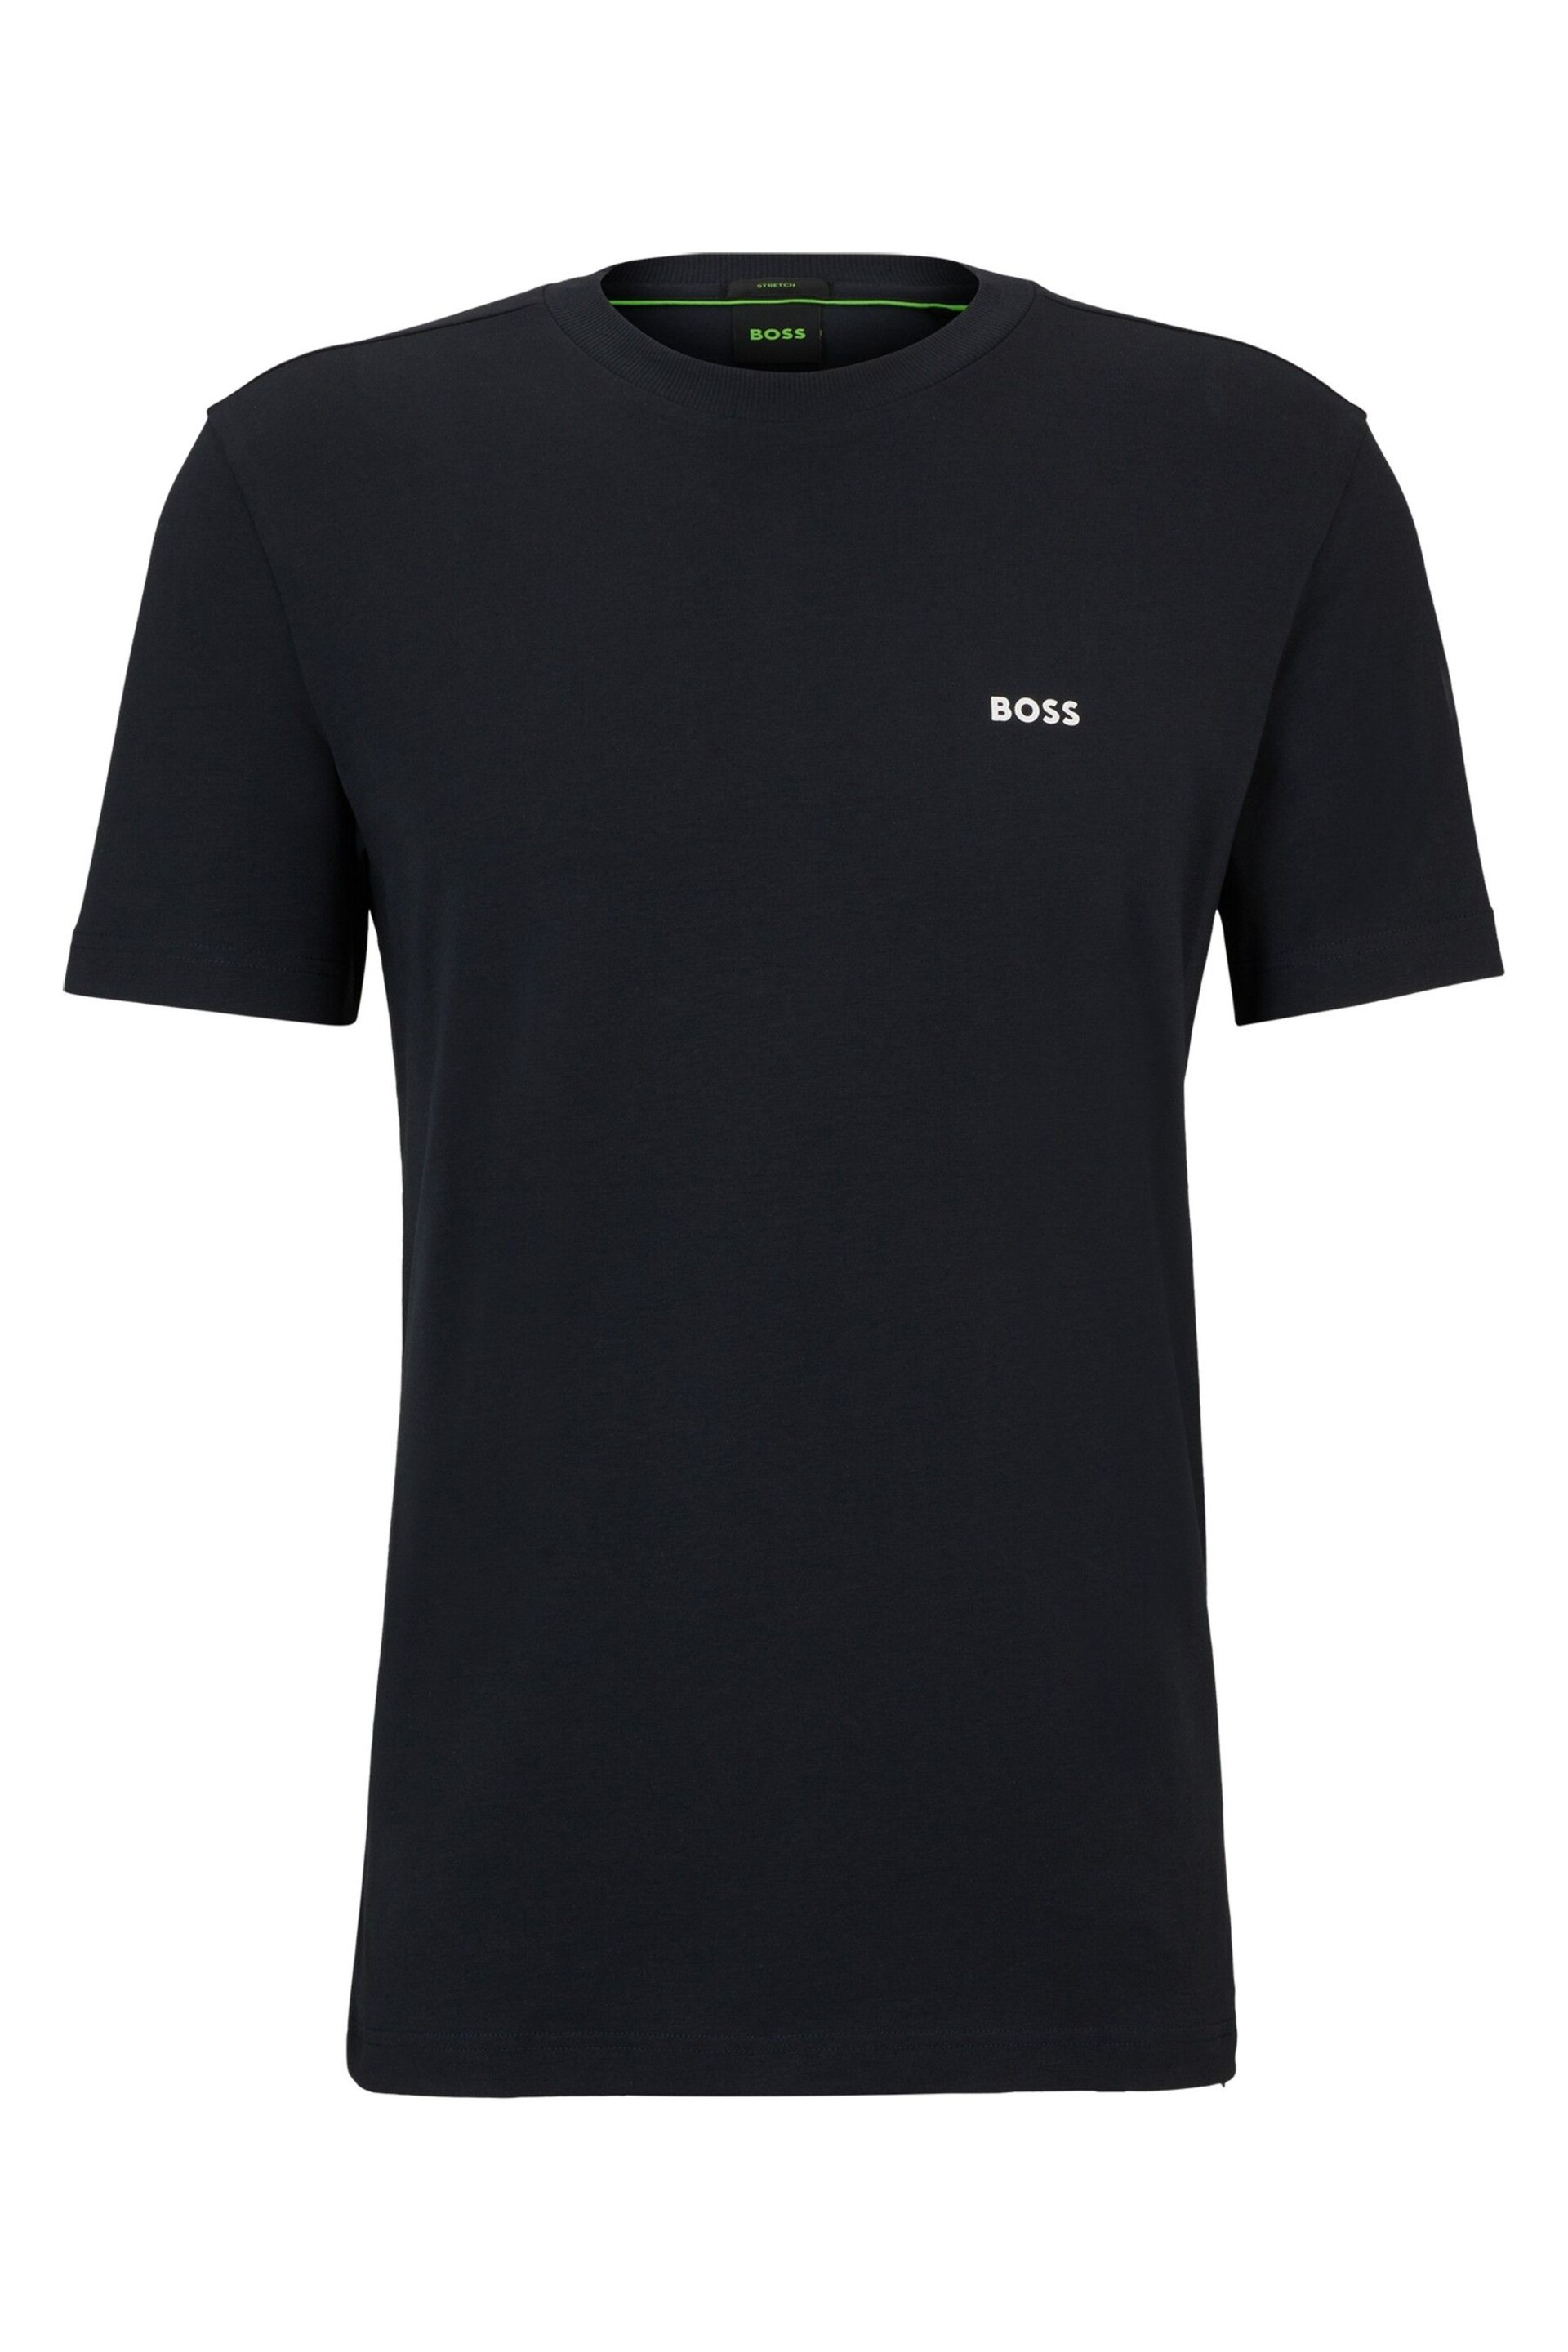 BOSS Navy Contrast-Logo T-Shirt - Image 5 of 5